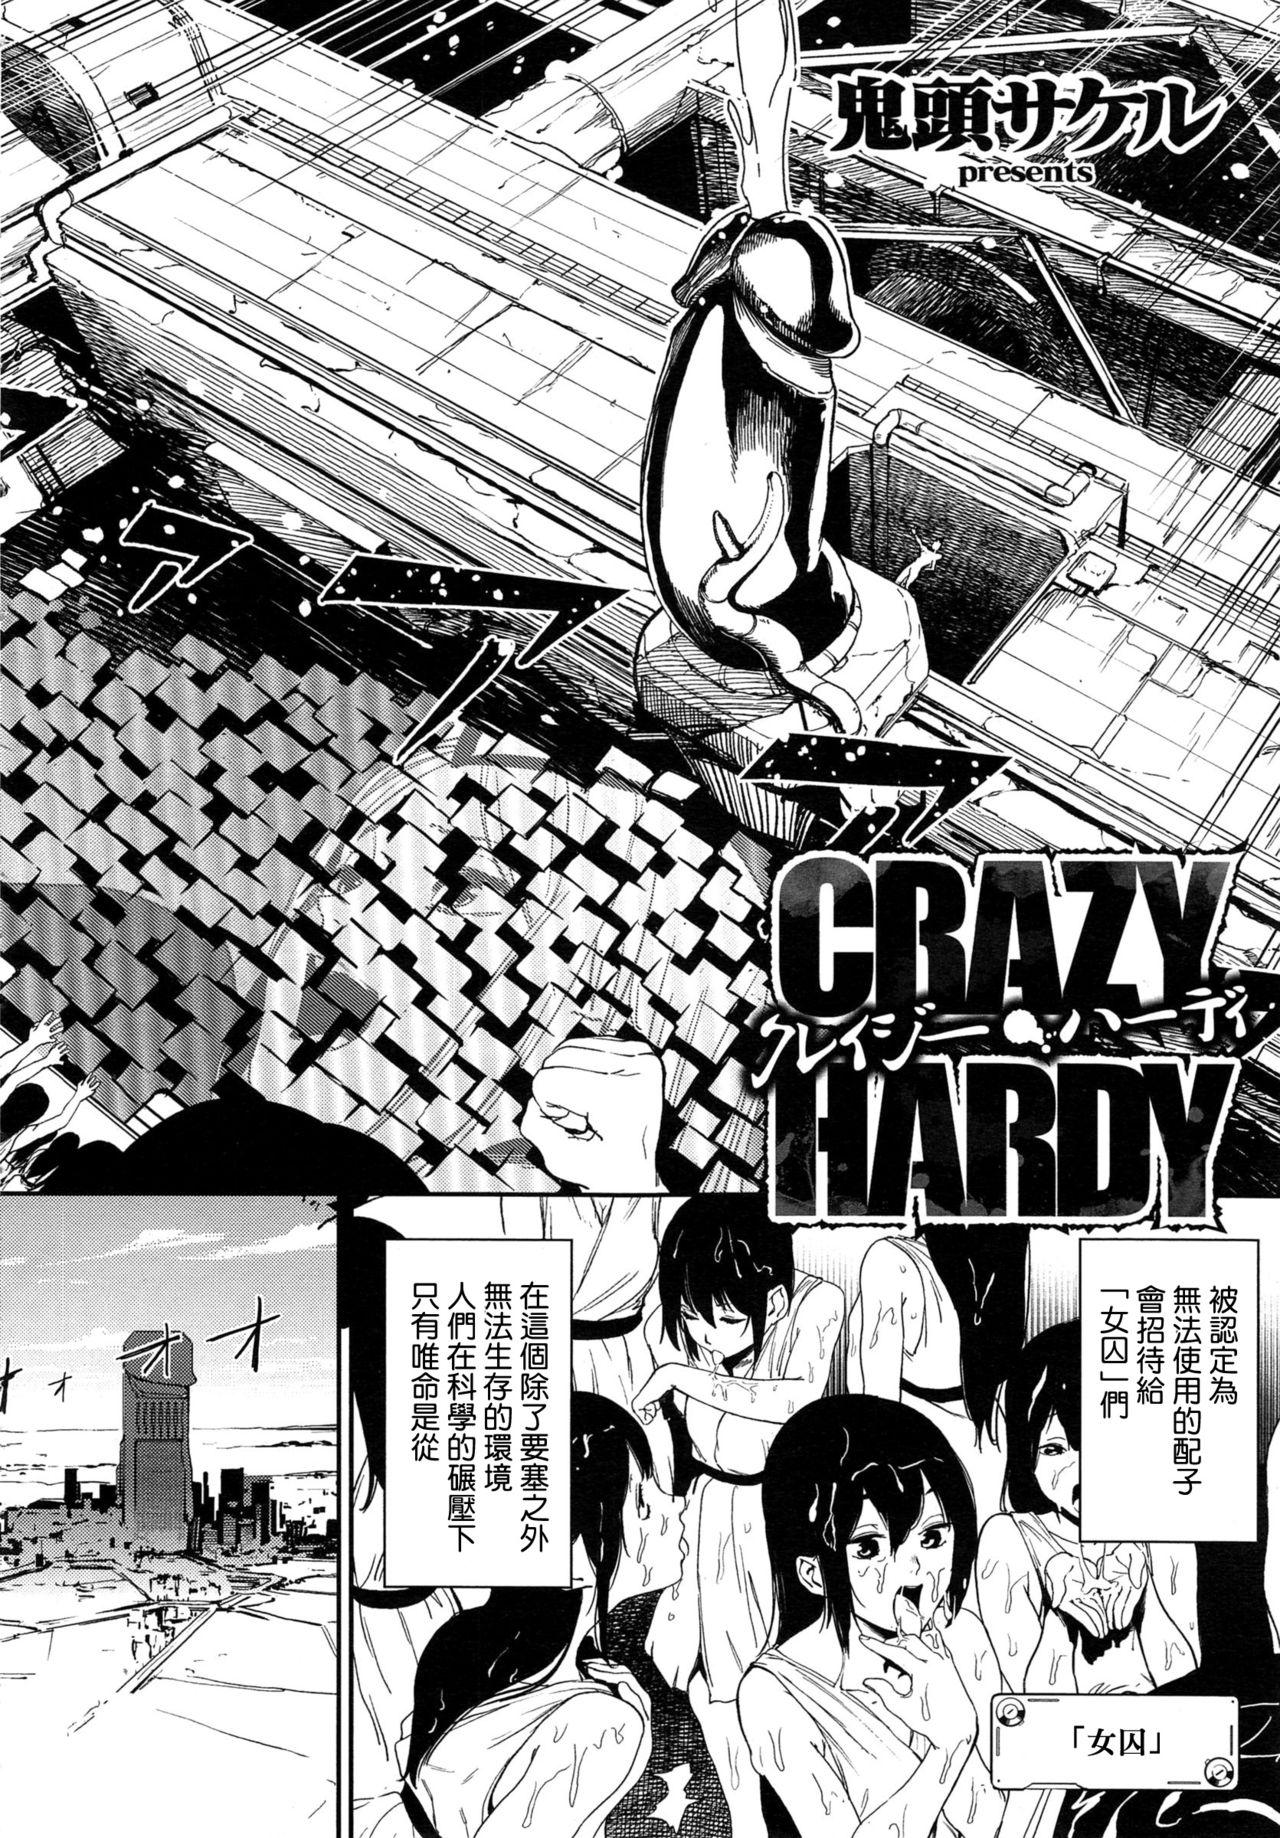 Dick CRAZY HARDY Storyline - Page 2